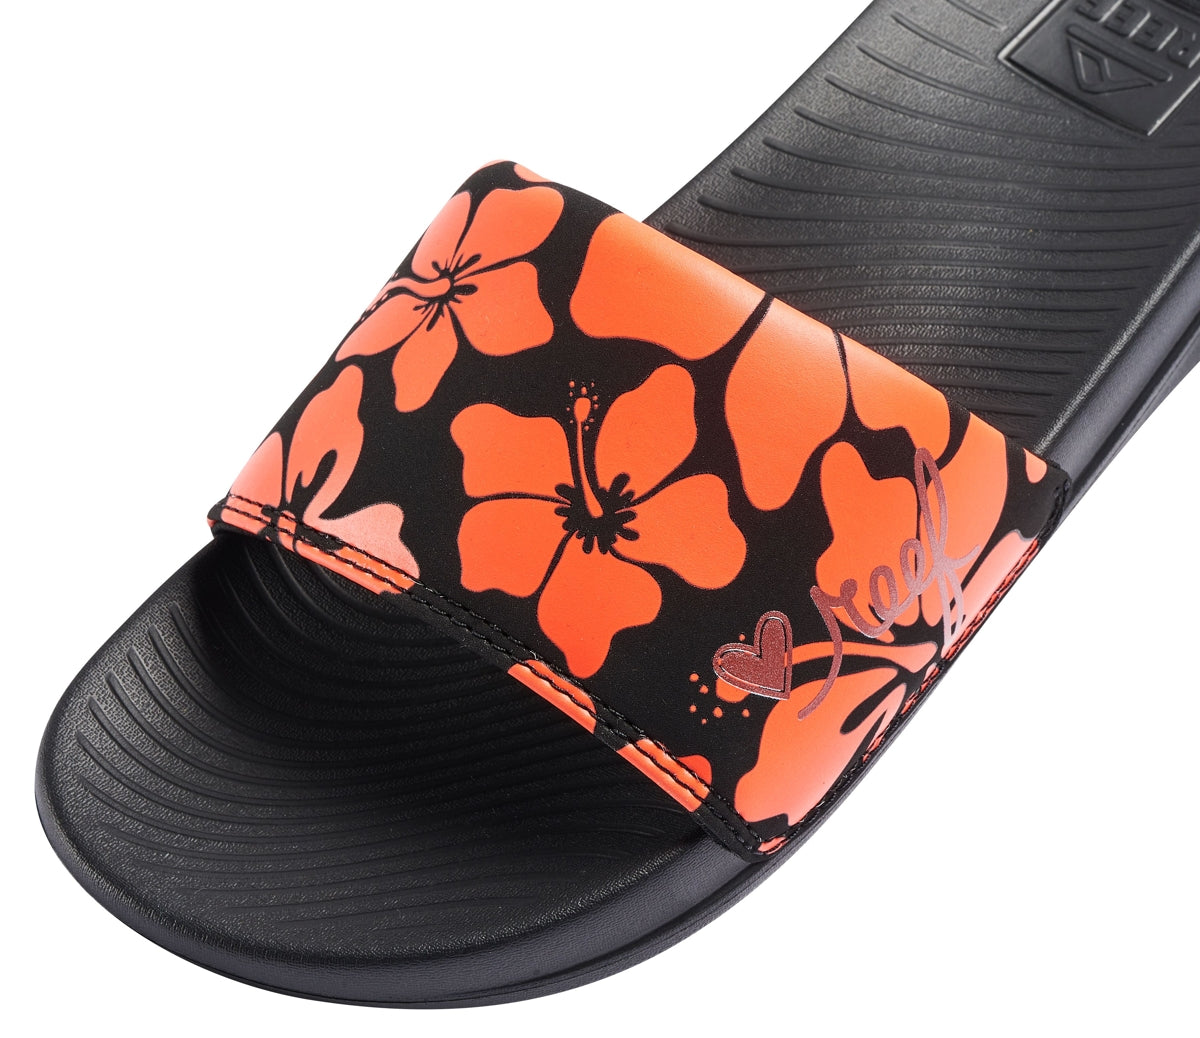 Reef Womens 'One Slide' Padded Strap Slider - Hibiscus